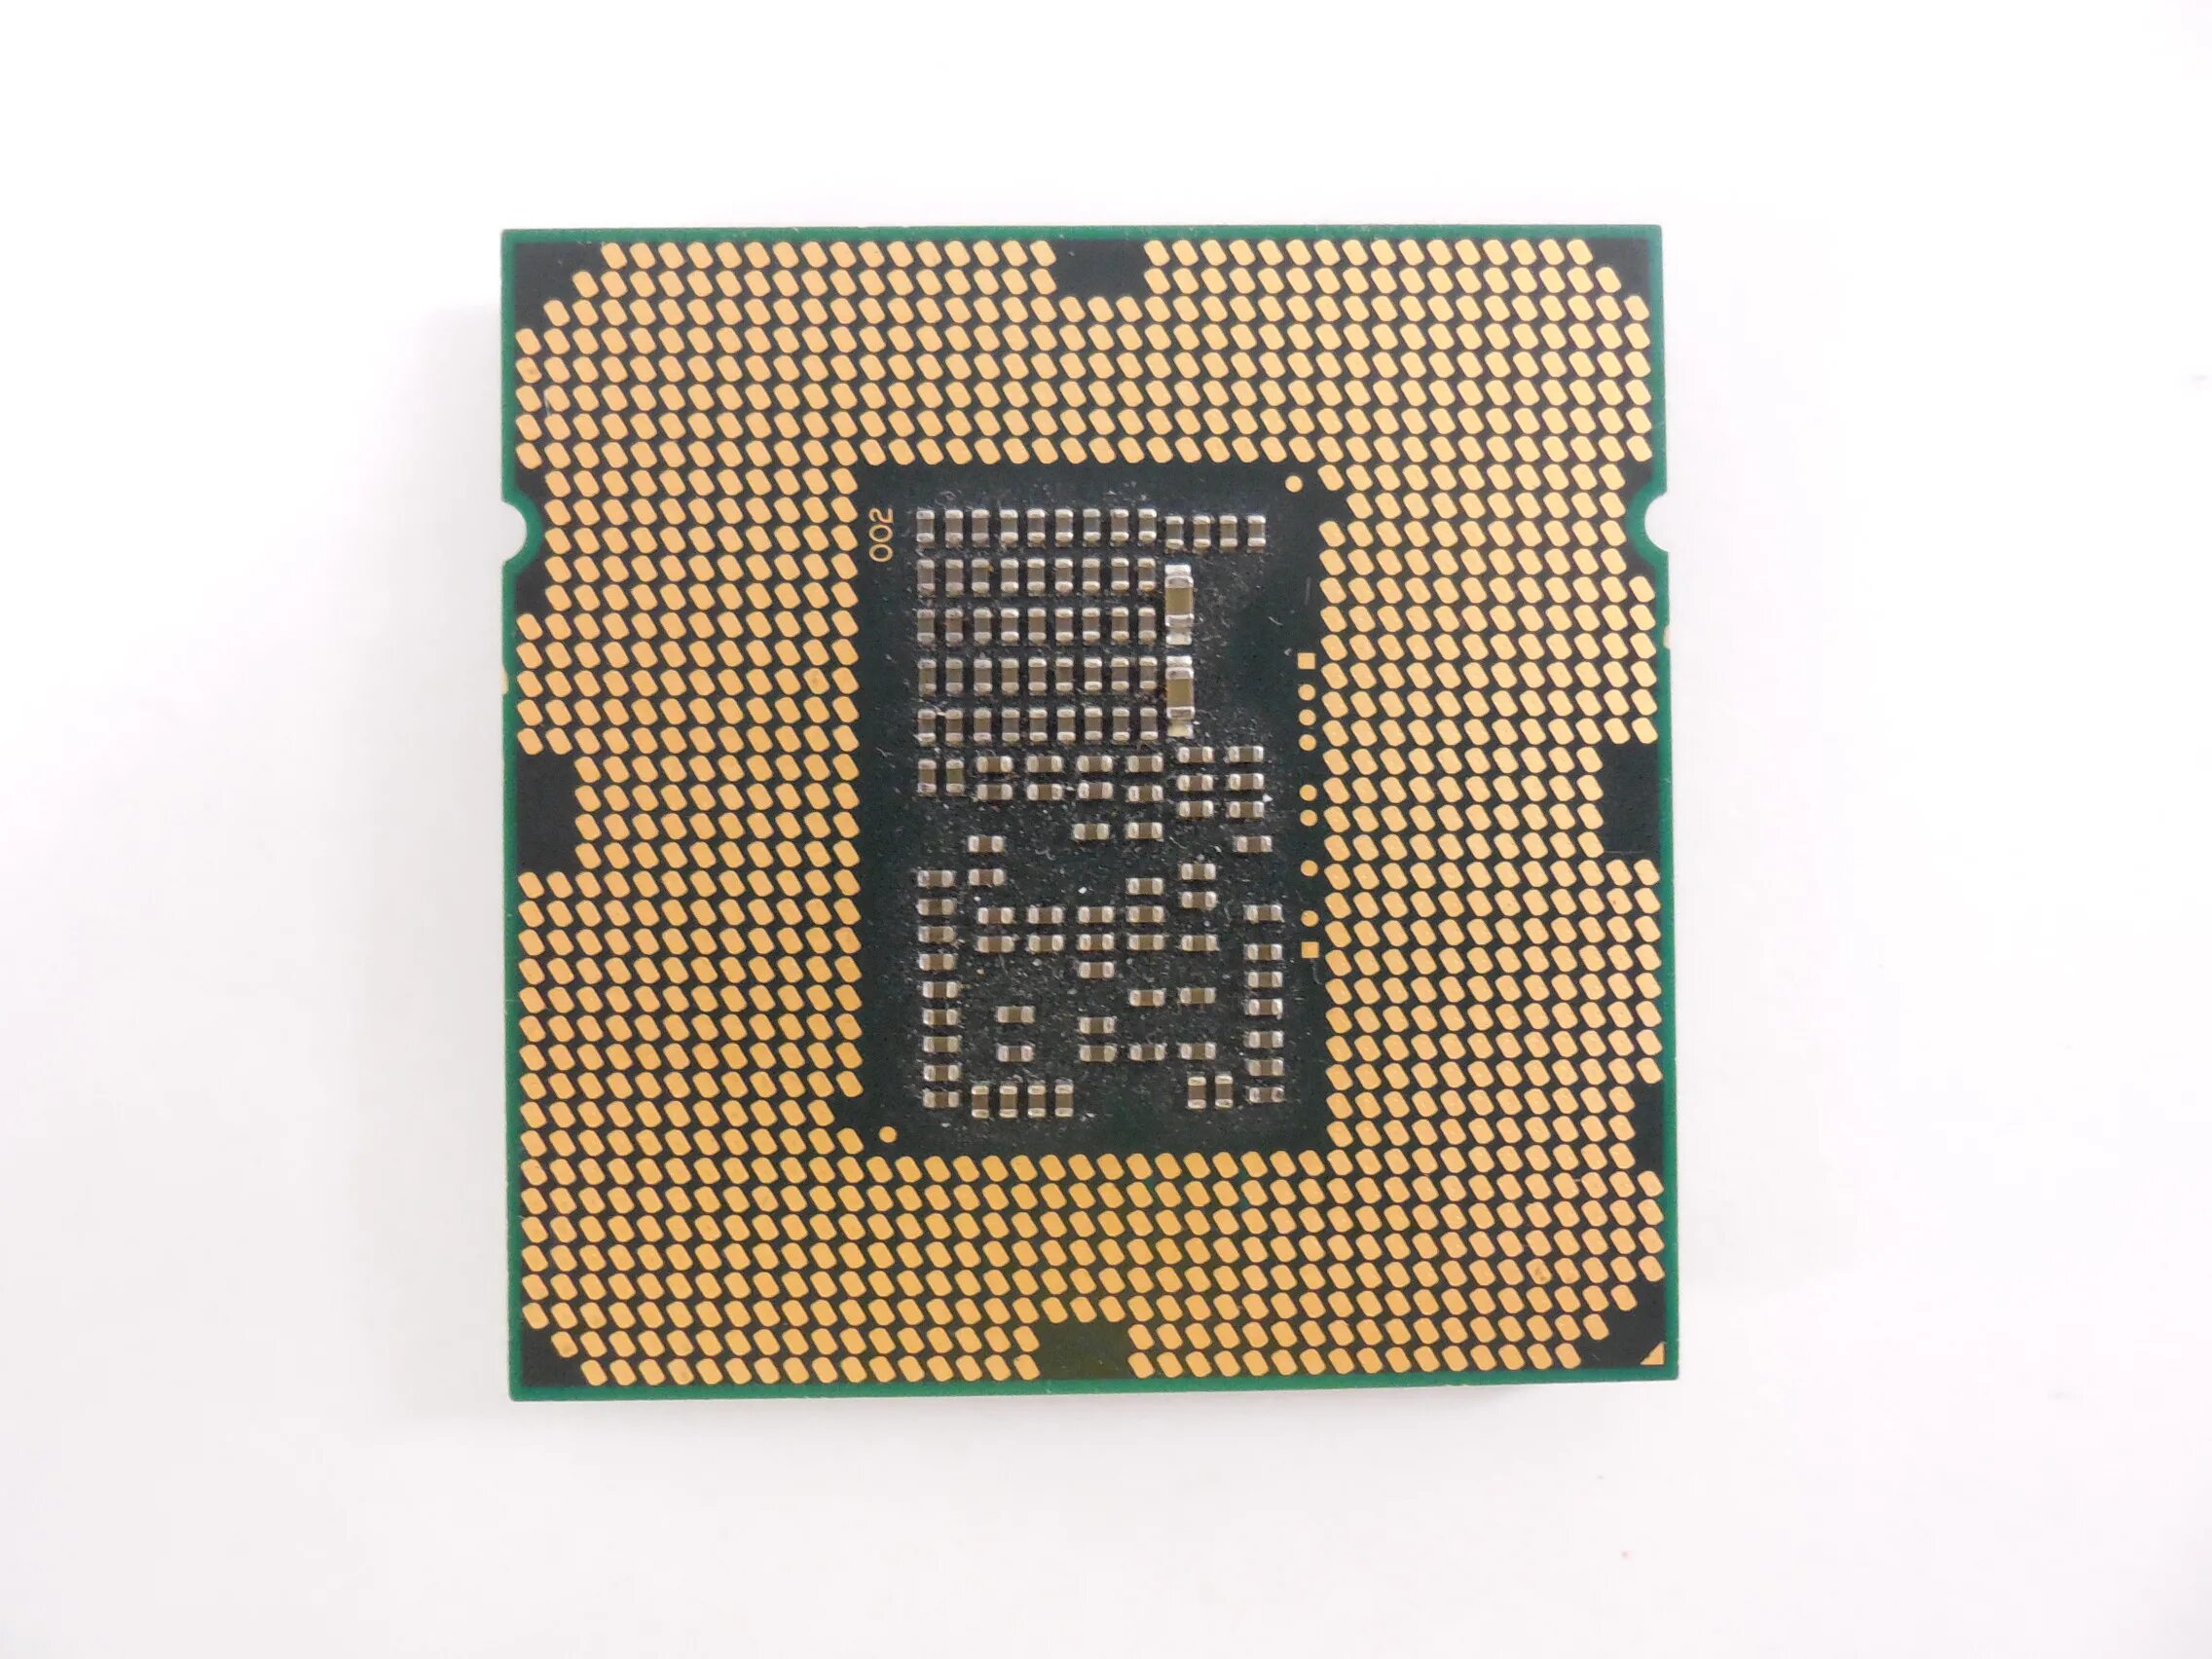 Intel Core i5-650 Clarkdale lga1156, 2 x 3200 МГЦ. Процессор Intel Core i5 650. Процессор сокет 1156 Intel Core i5-650. Процессор сокет 1150 i7 4790. Модель процессора core i5